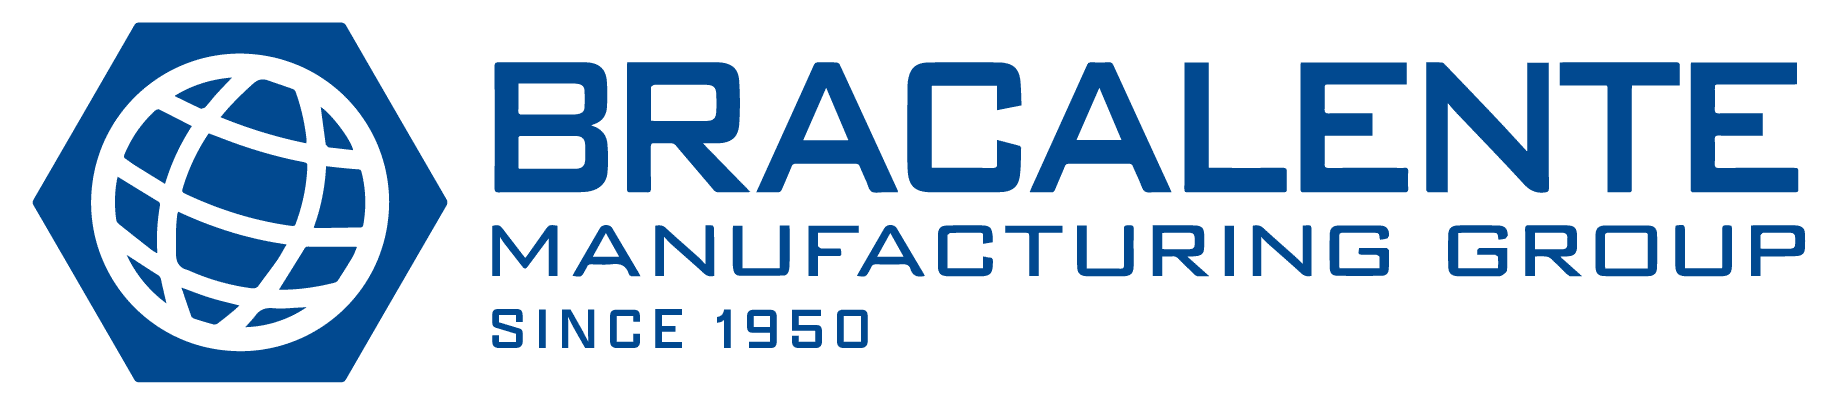 Bracalente 製造集團成立於 1950 年